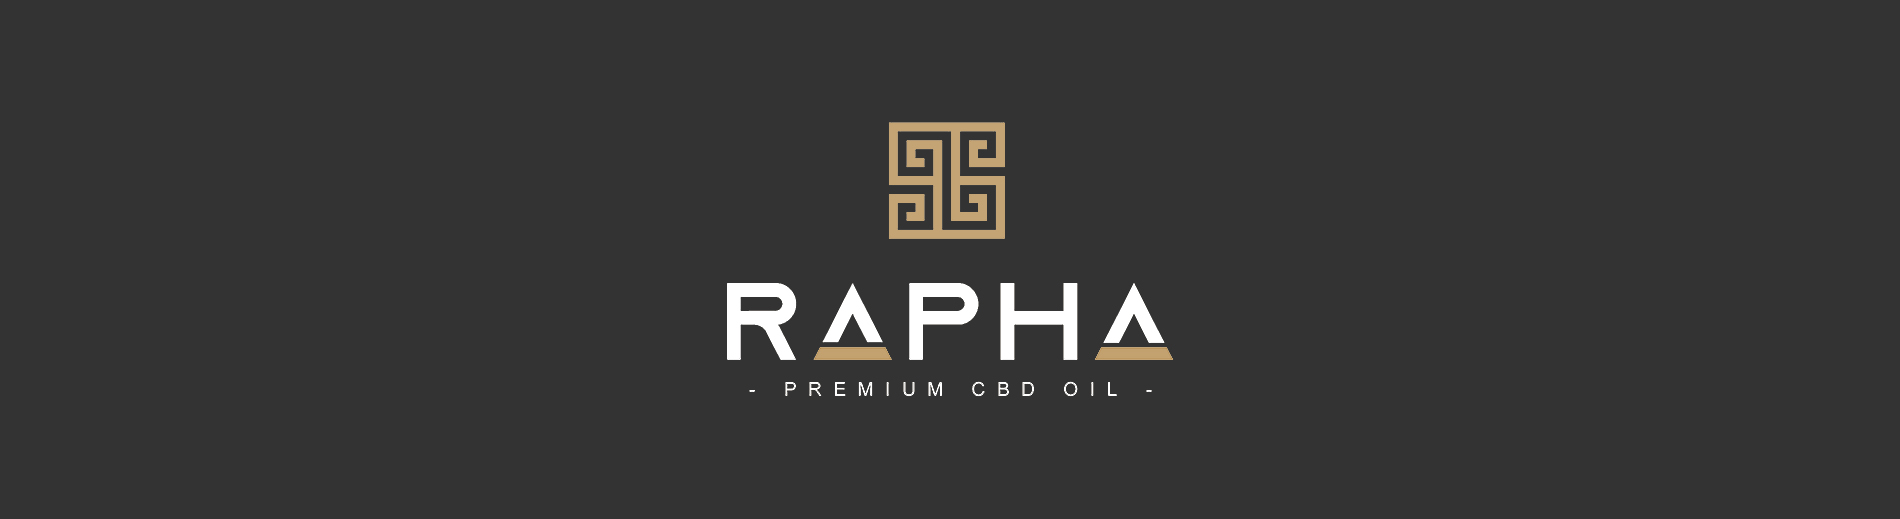 Rapha Case Study title image for logo design project